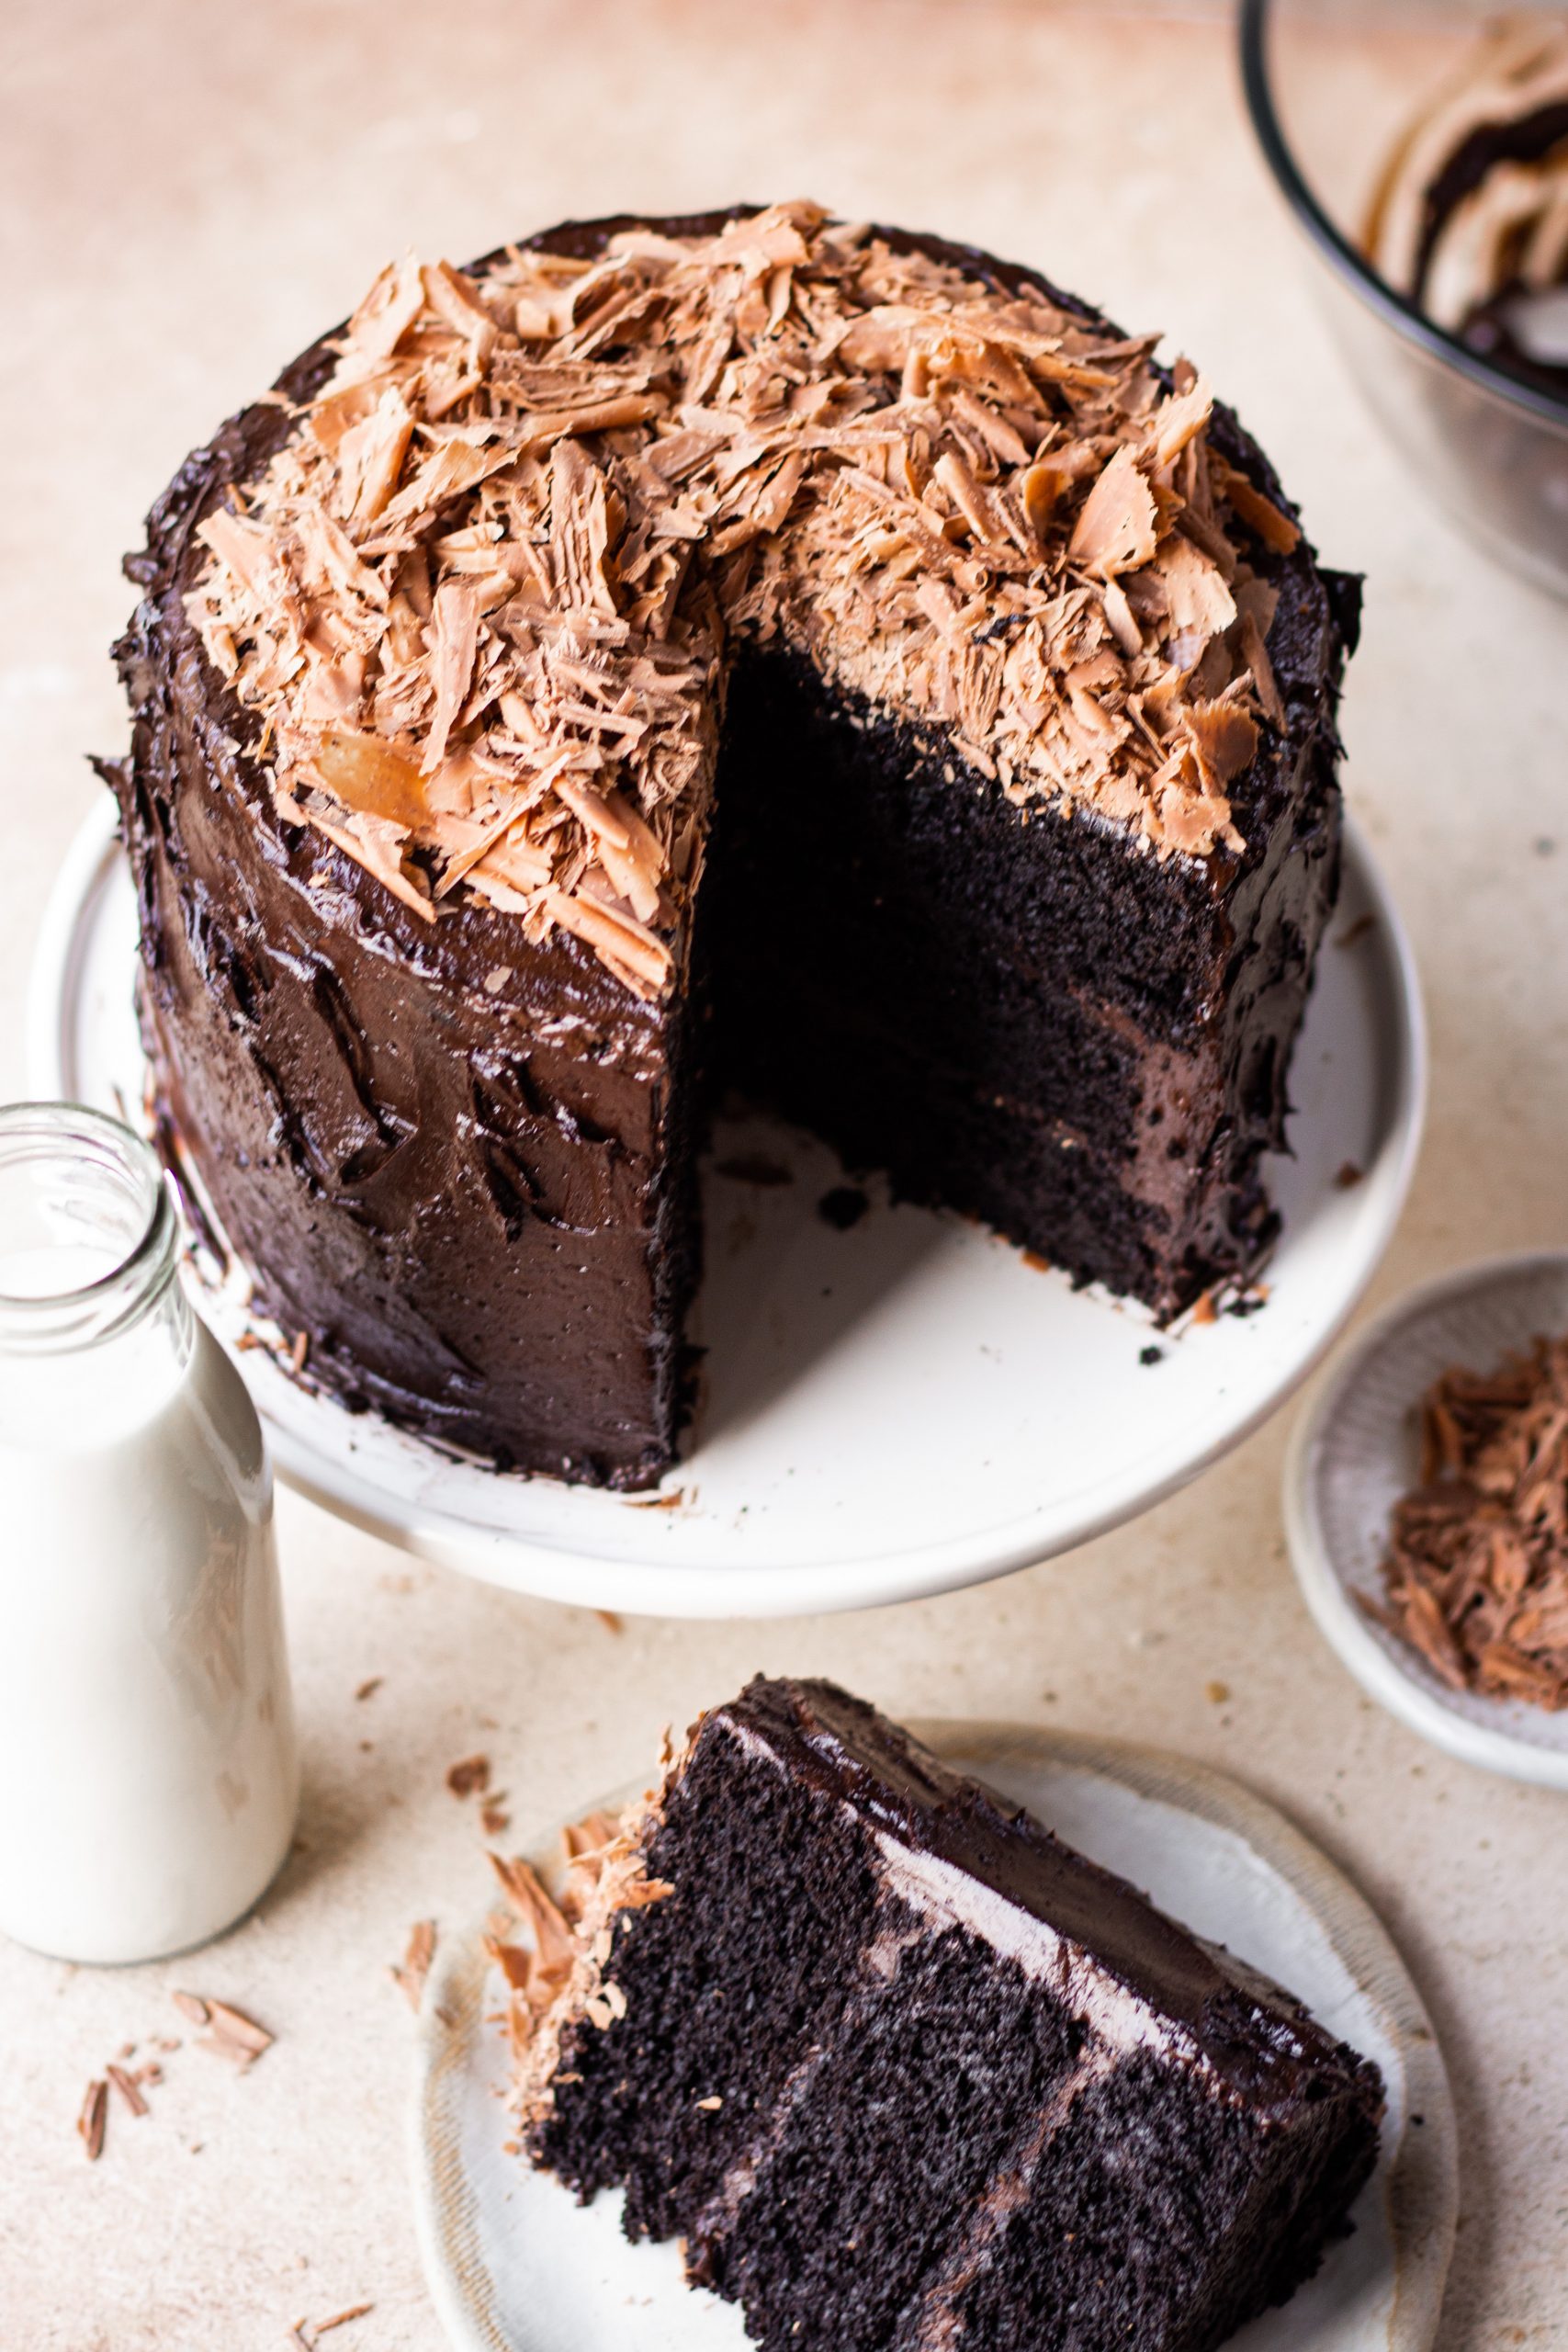 eggless chocolate cake recipe